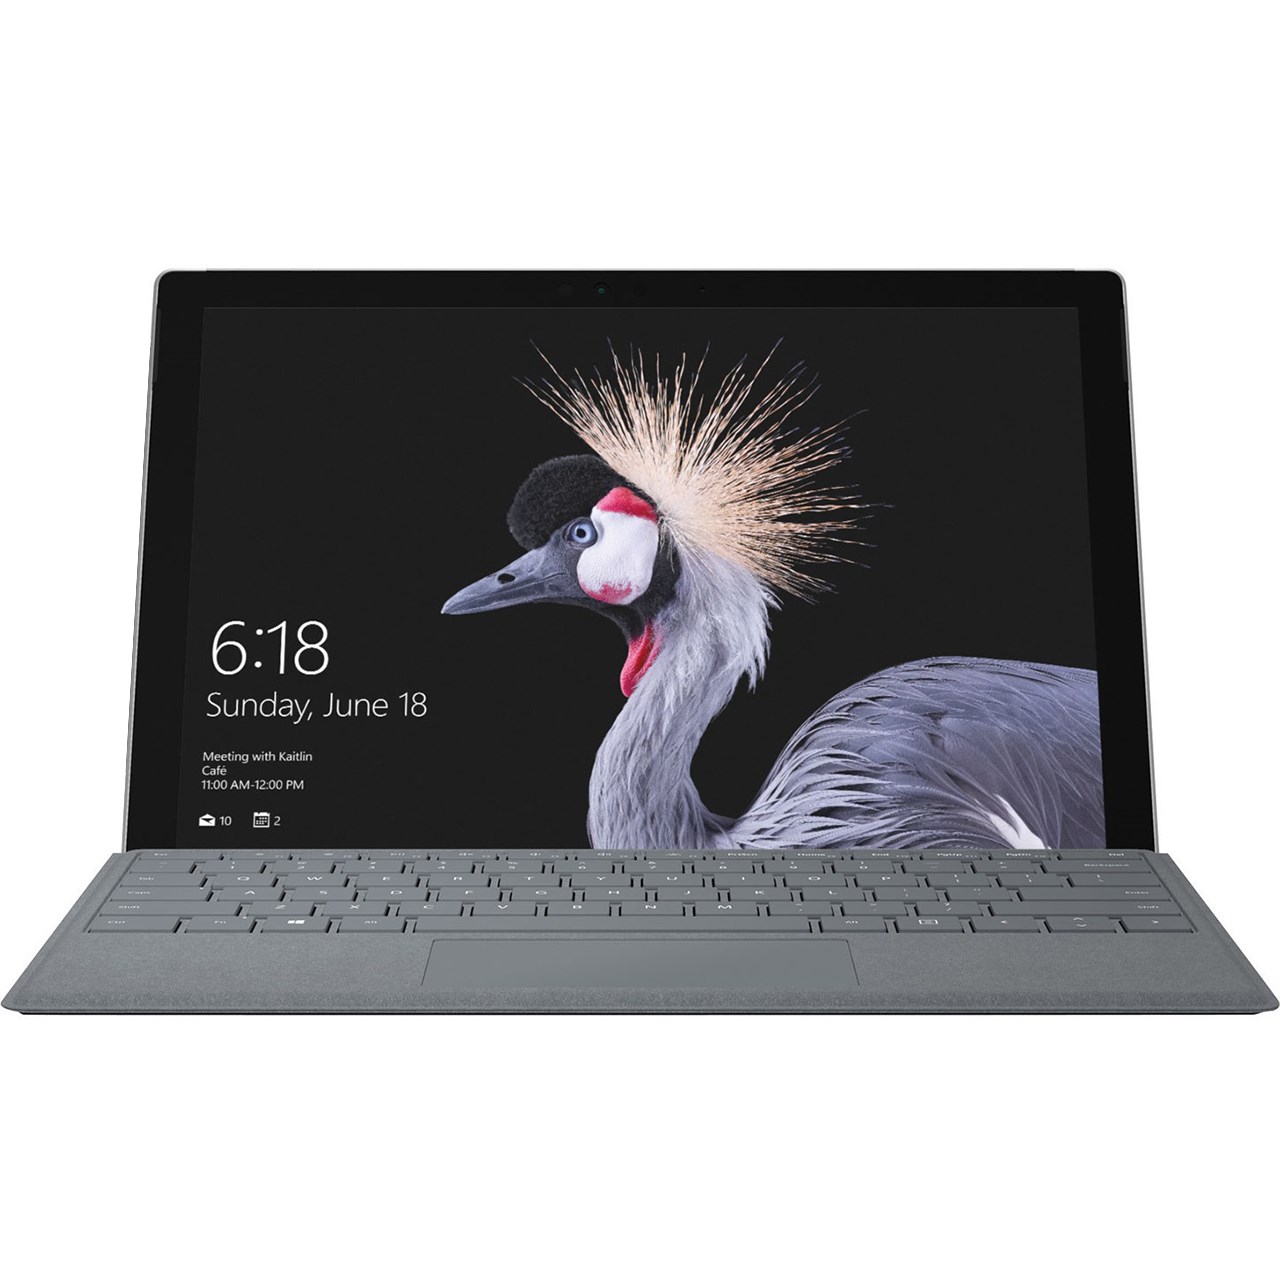 تبلت مایکروسافت مدل Surface Pro 2017 - B به همراه کیبورد سیگنیچر رنگ پلاتینیوم و کیف چرم صنوبر  - ظرفیت 128 گیگابایت